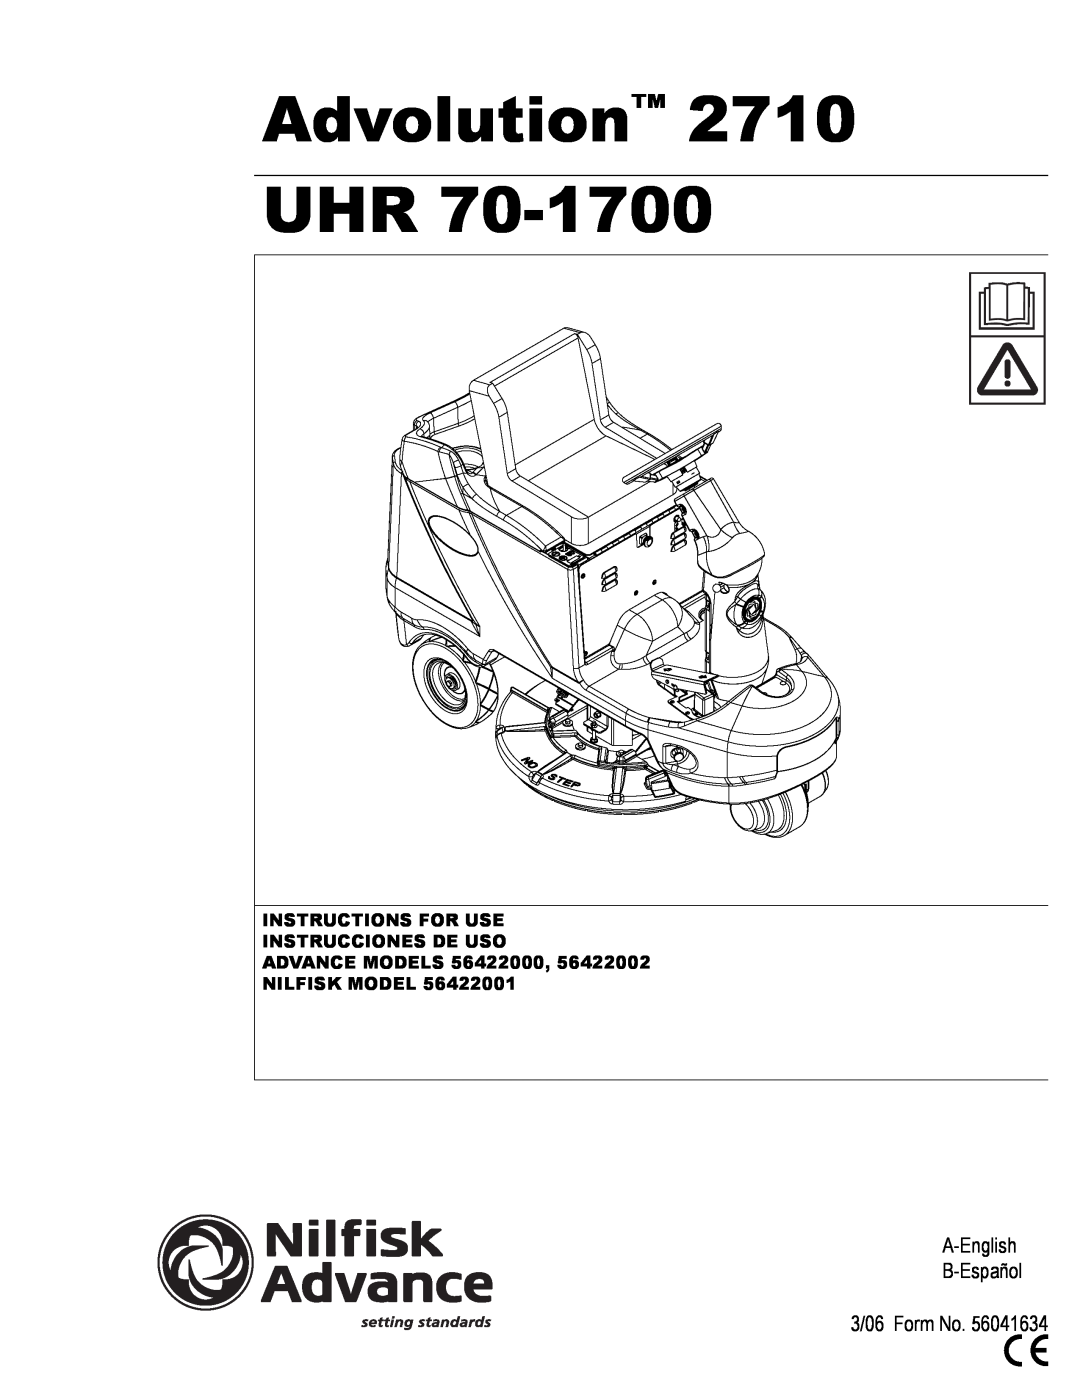 Nilfisk-Advance America 56422000, UHR 70-1700 manual Advolution 2710 UHR, A-English B-Español 3/06 Form No, Nilfisk Model 